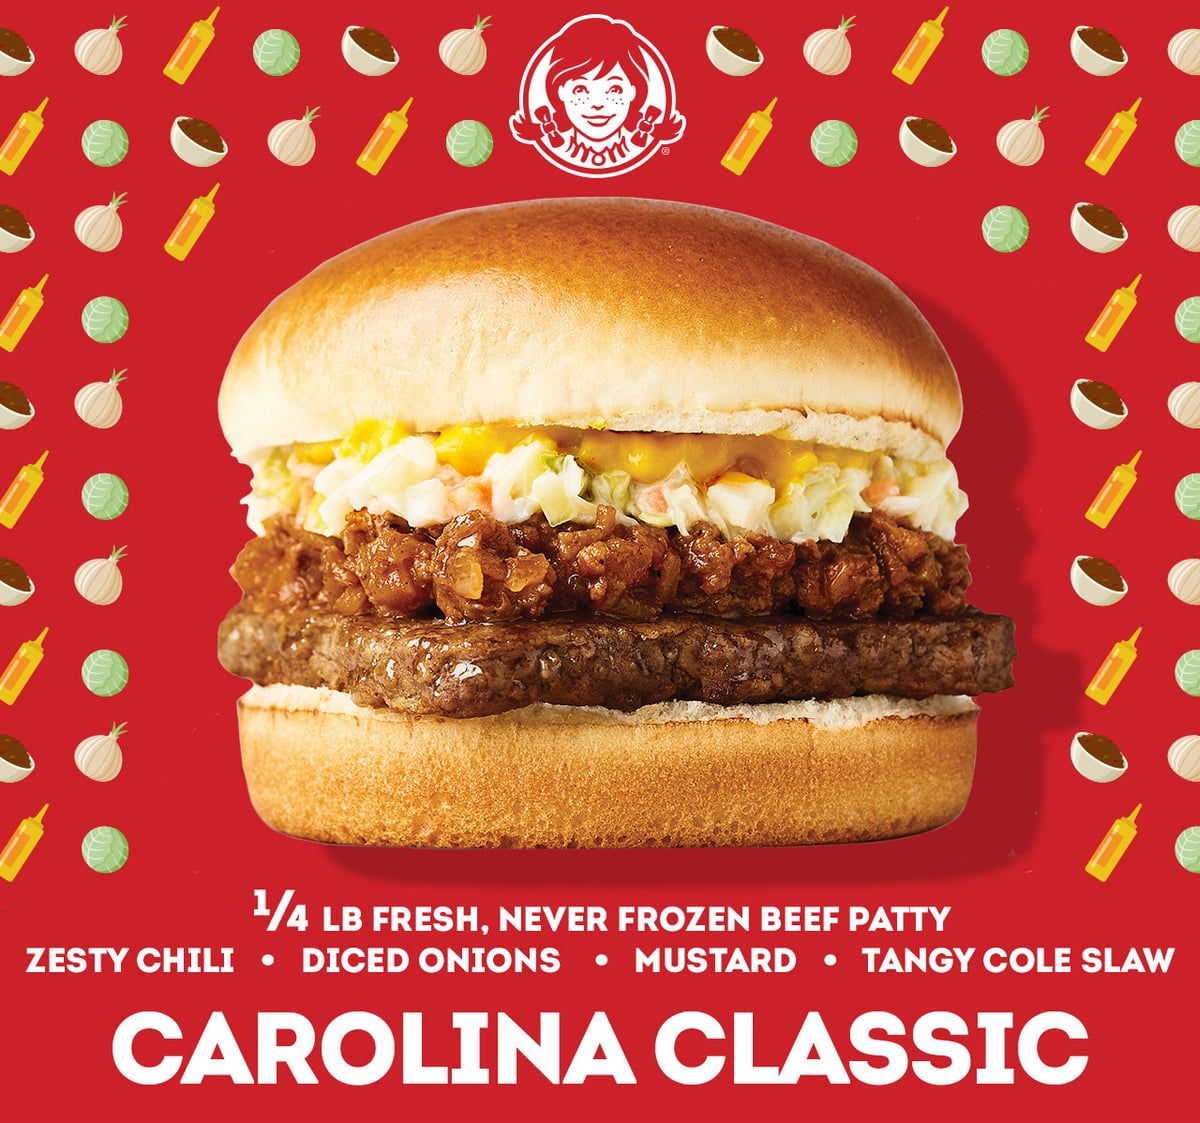 FAST FOOD NEWS Wendy's Carolina Classic Burger The Impulsive Buy